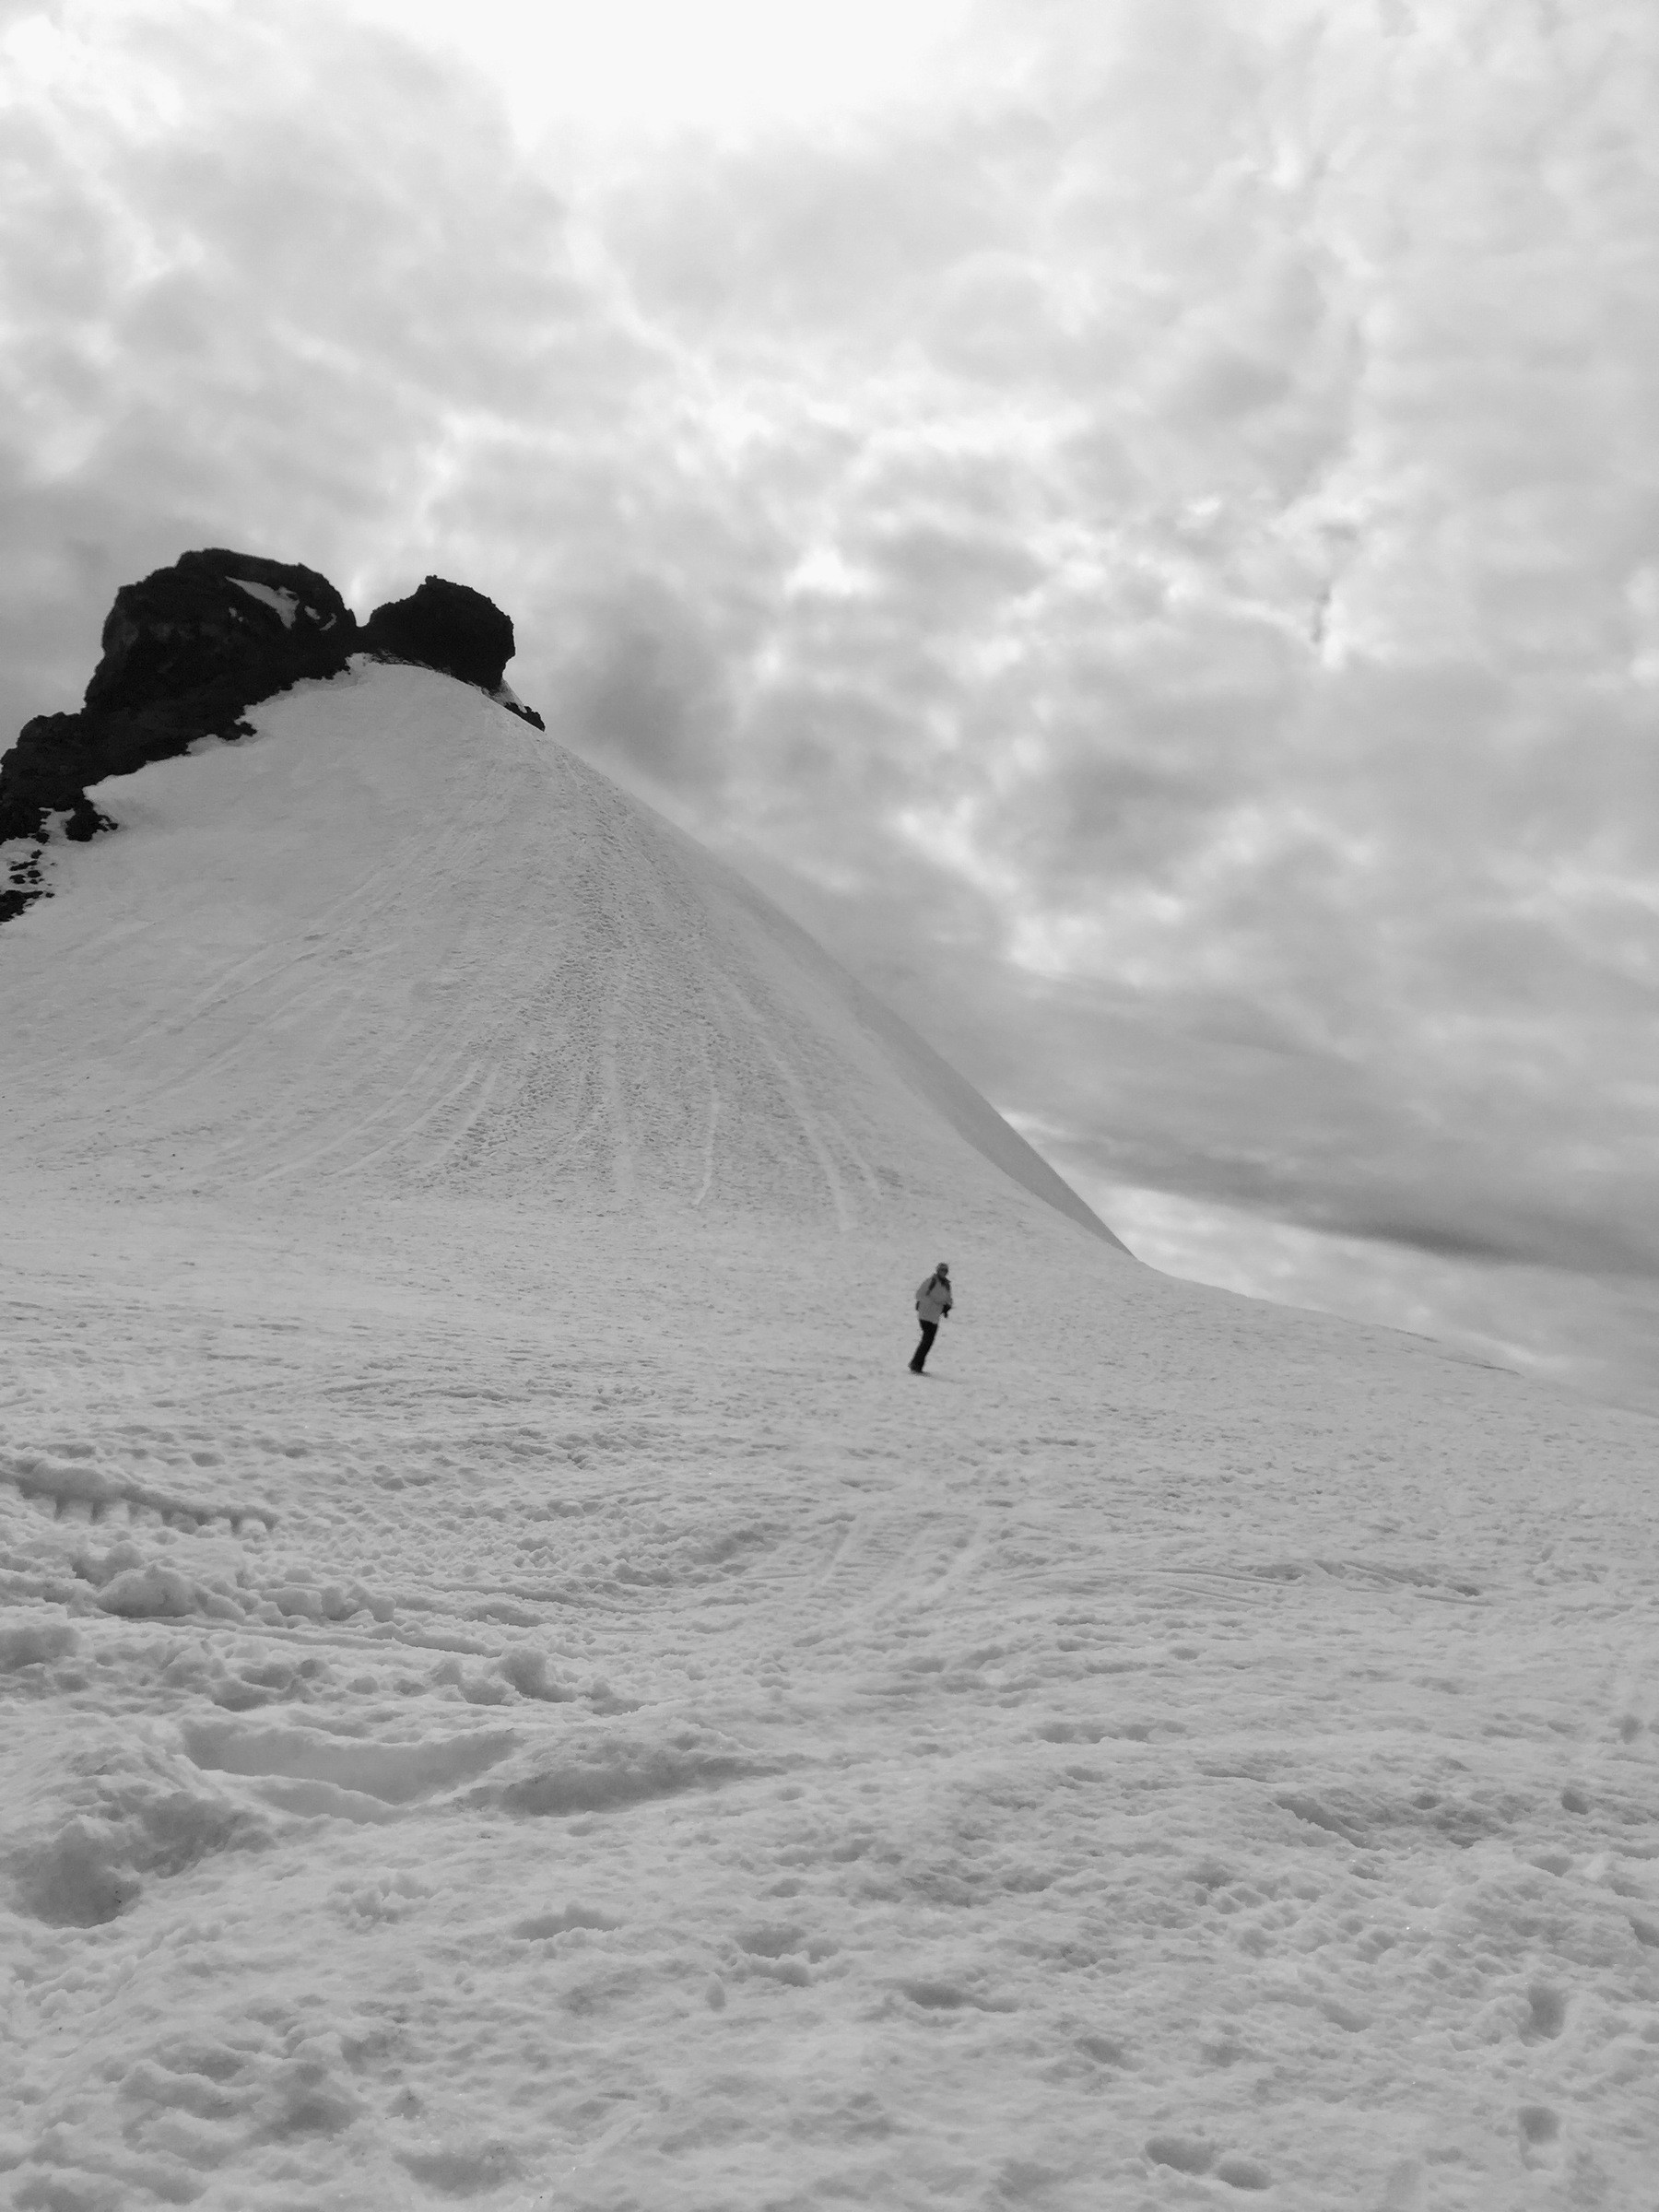 One person walks down the peak